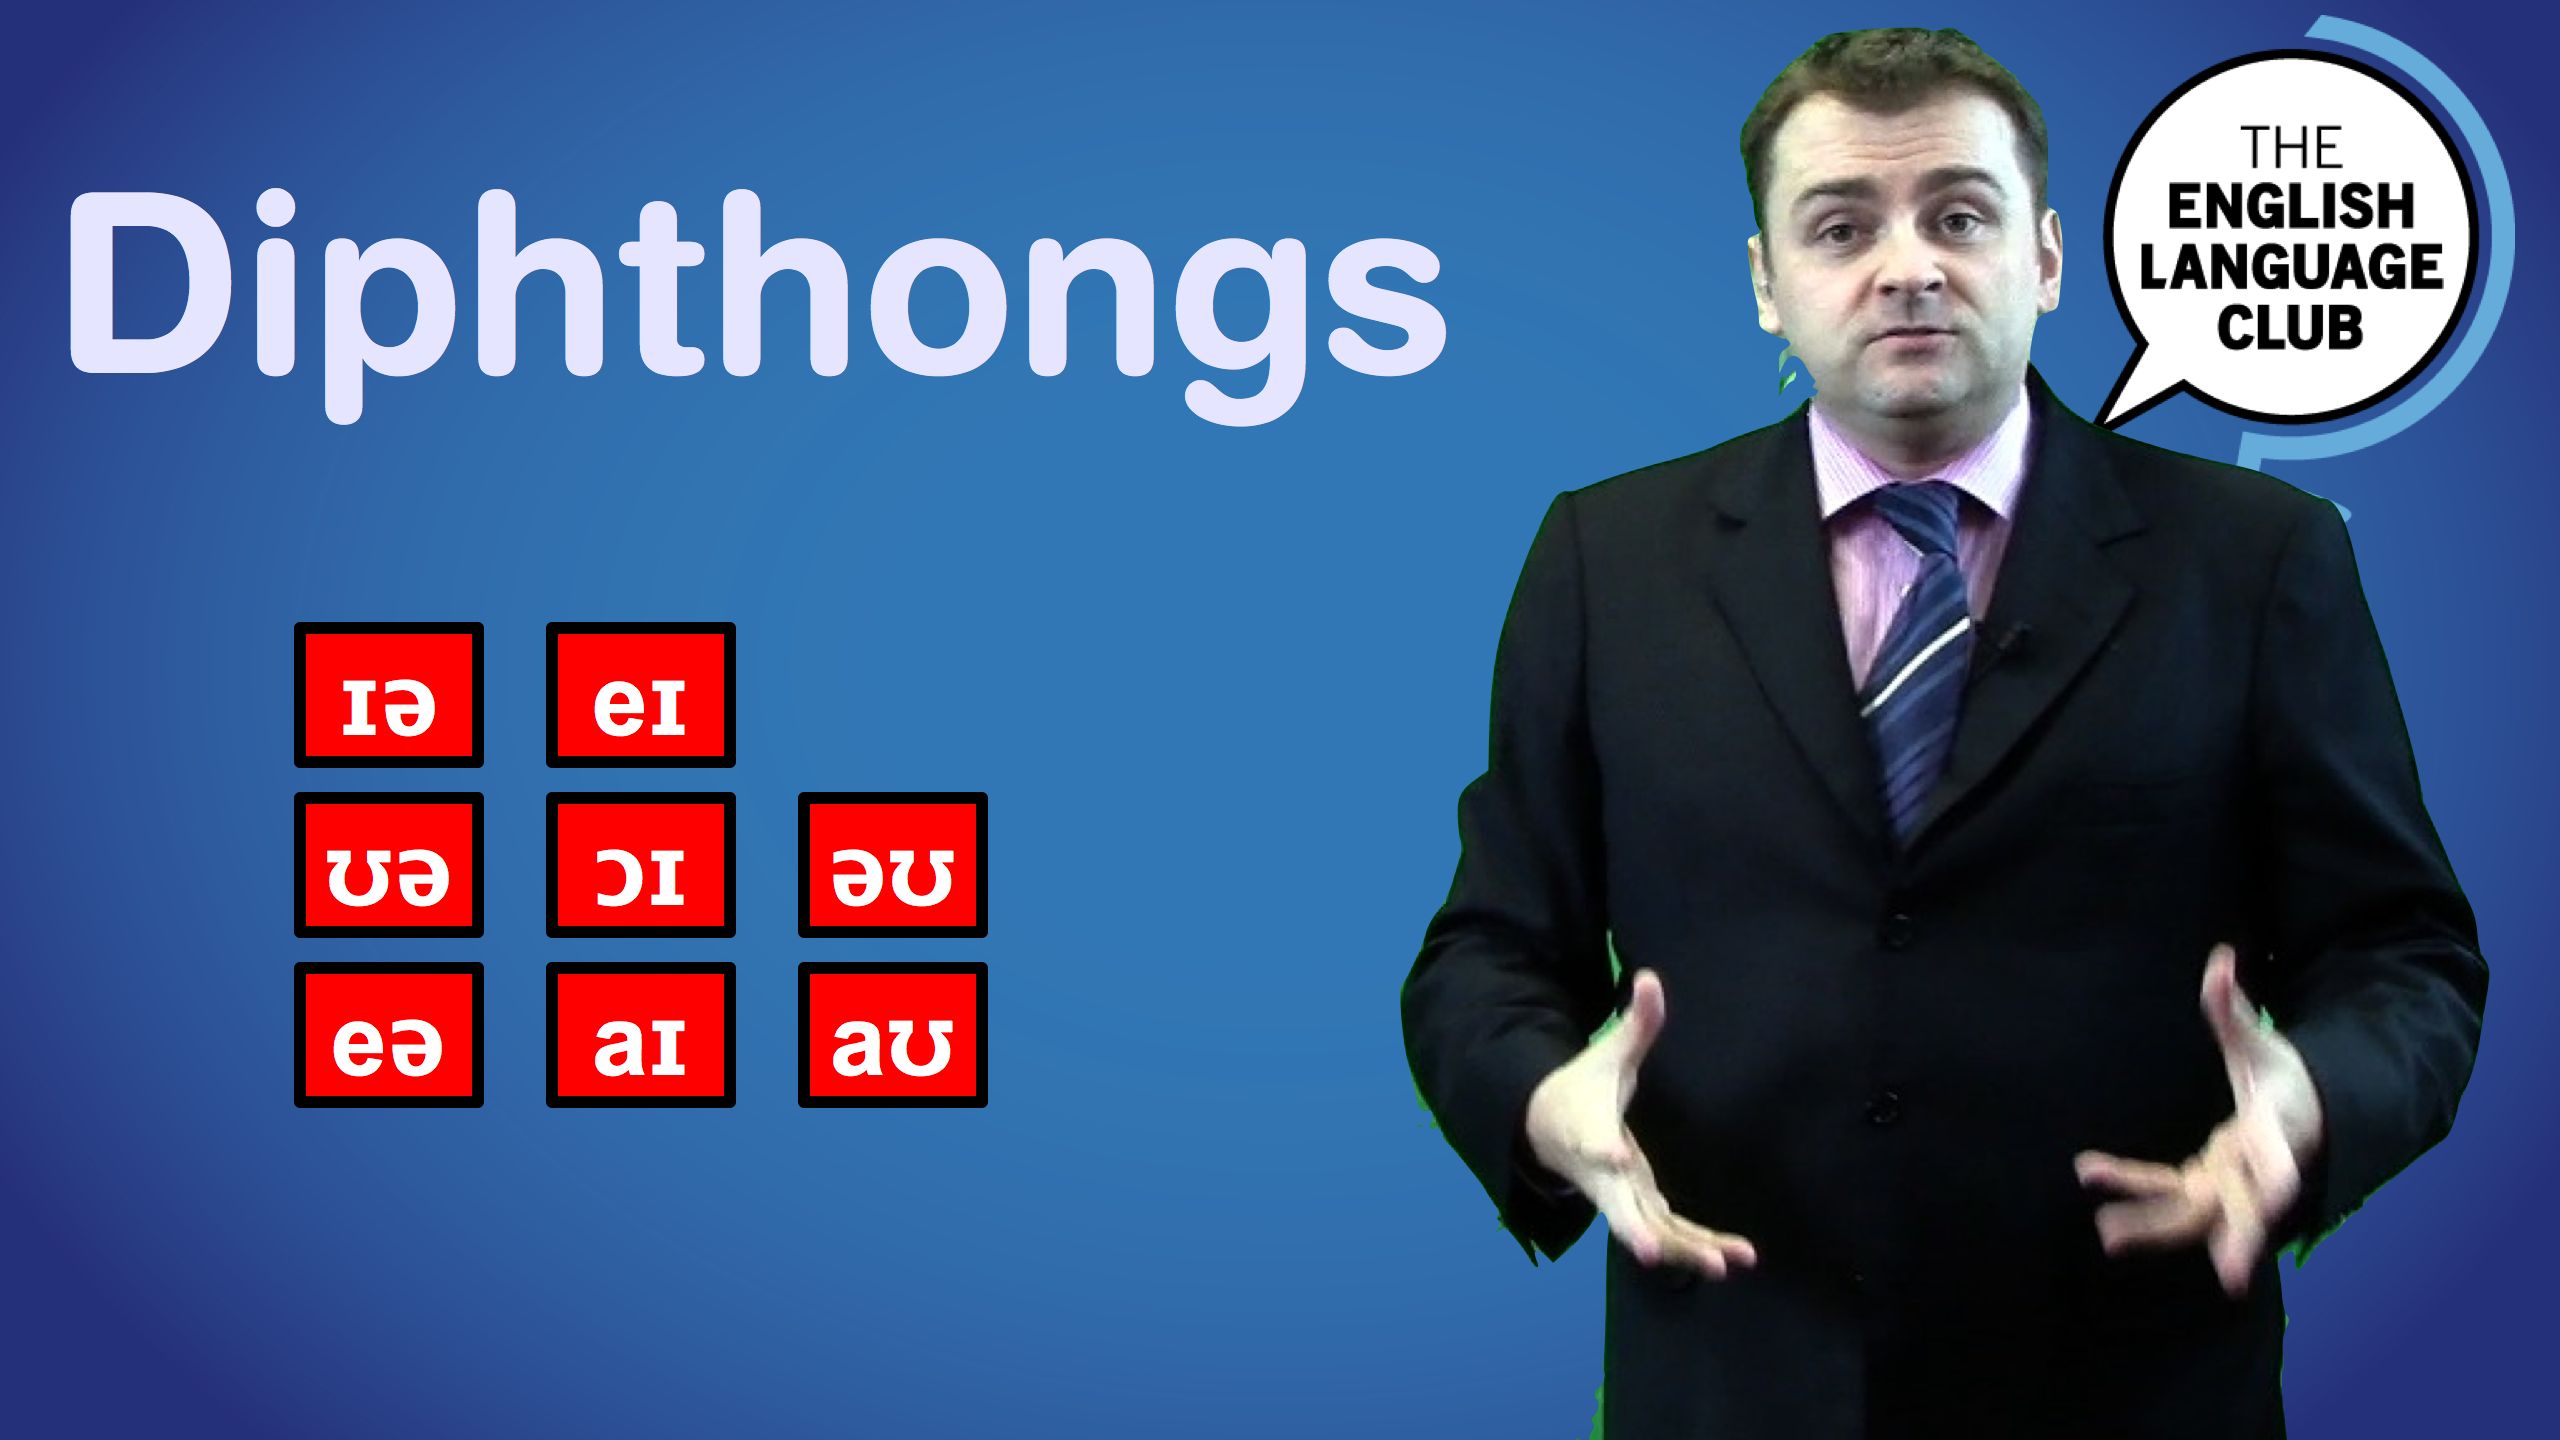 diphthongs diphthong dipthongs pronounce